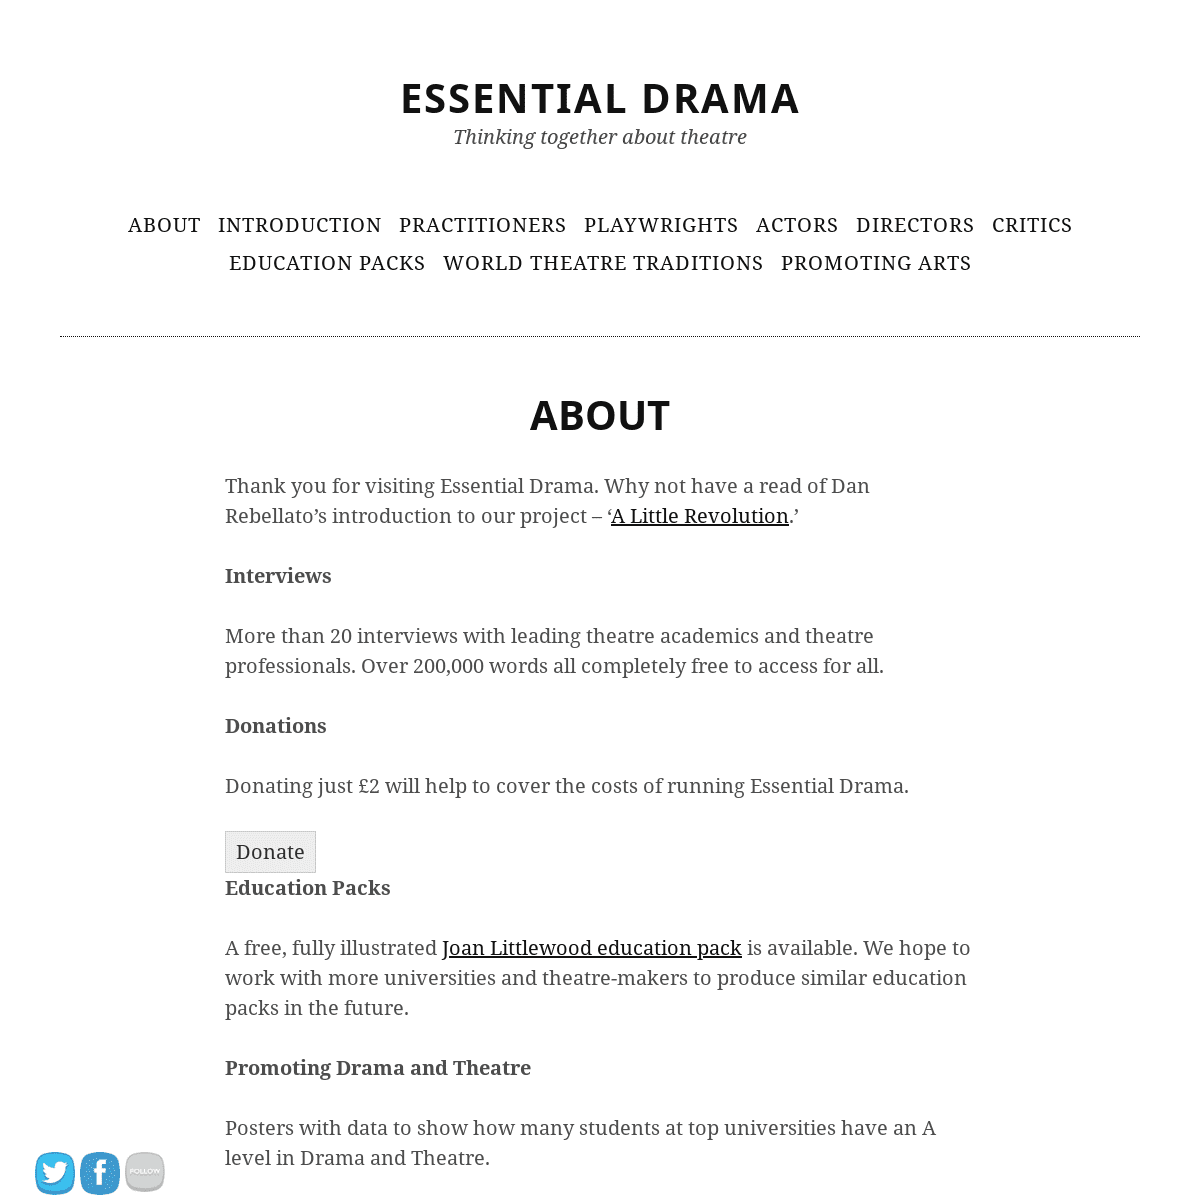 A complete backup of essentialdrama.com